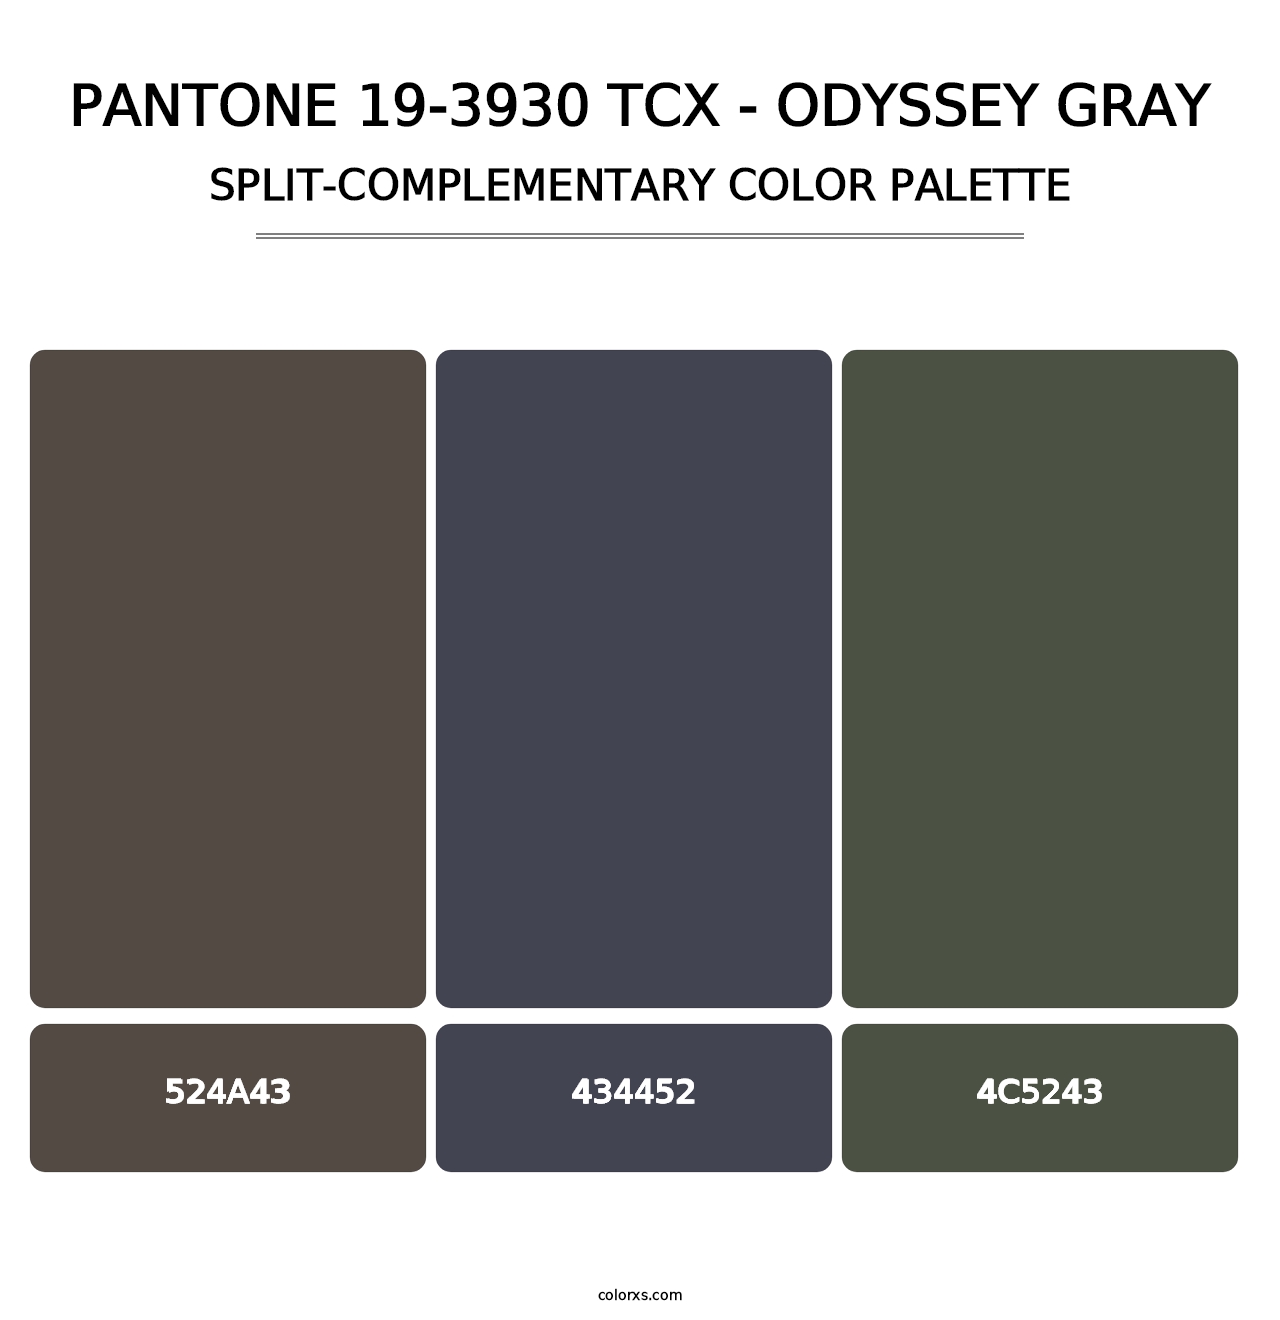 PANTONE 19-3930 TCX - Odyssey Gray - Split-Complementary Color Palette